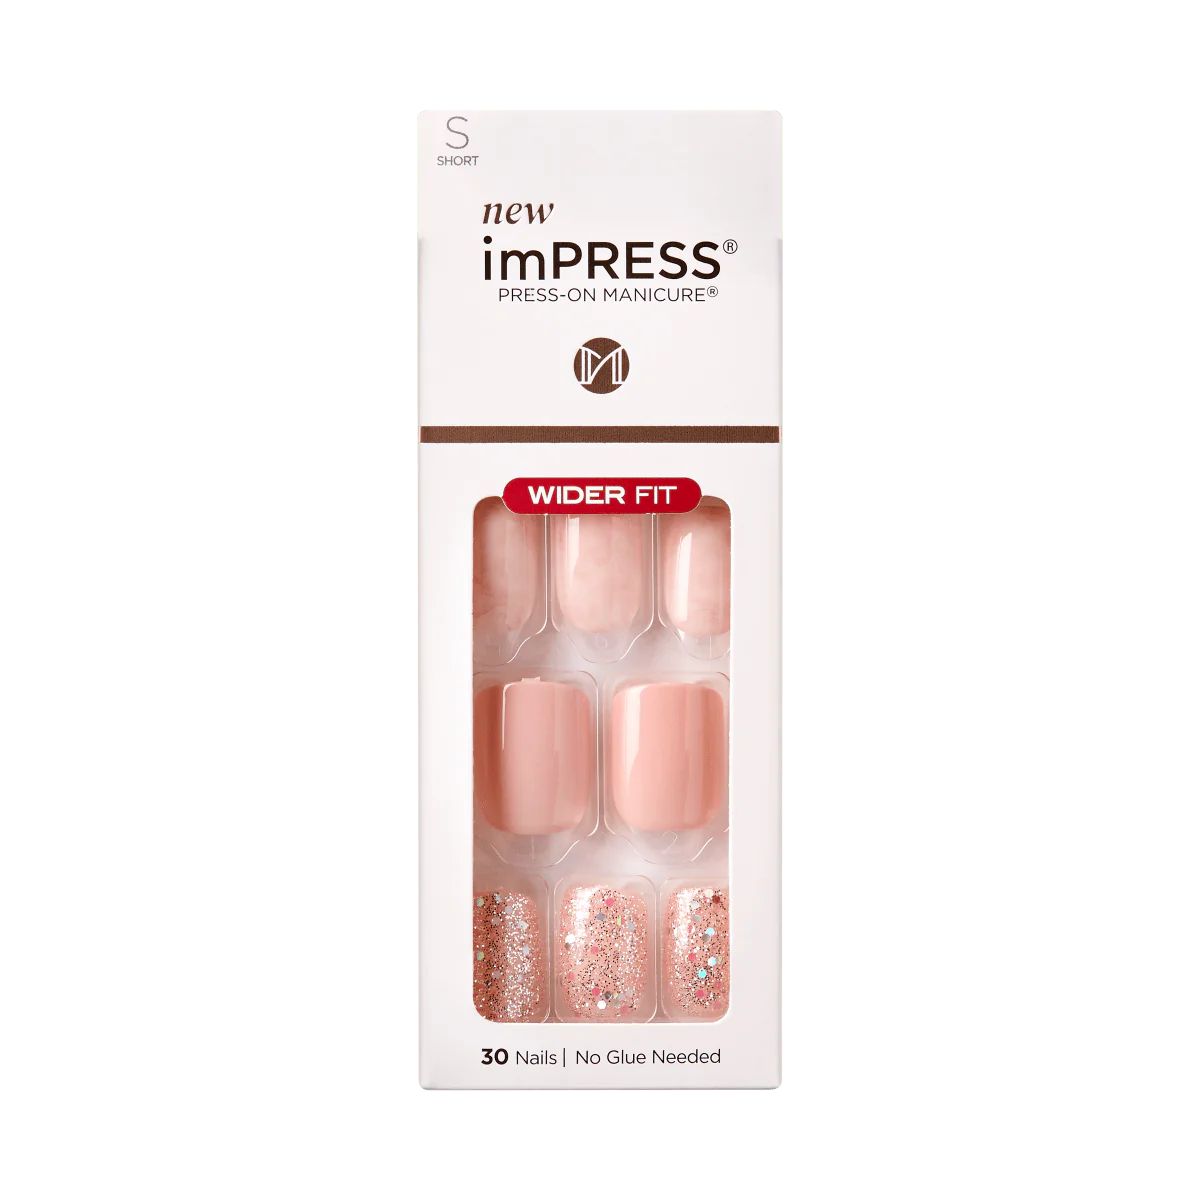 KISS imPRESS Press-On Nails Wide Fit Fake Nails Manicure Set - Just a Dream - 30ct | KISS, imPRESS, JOAH